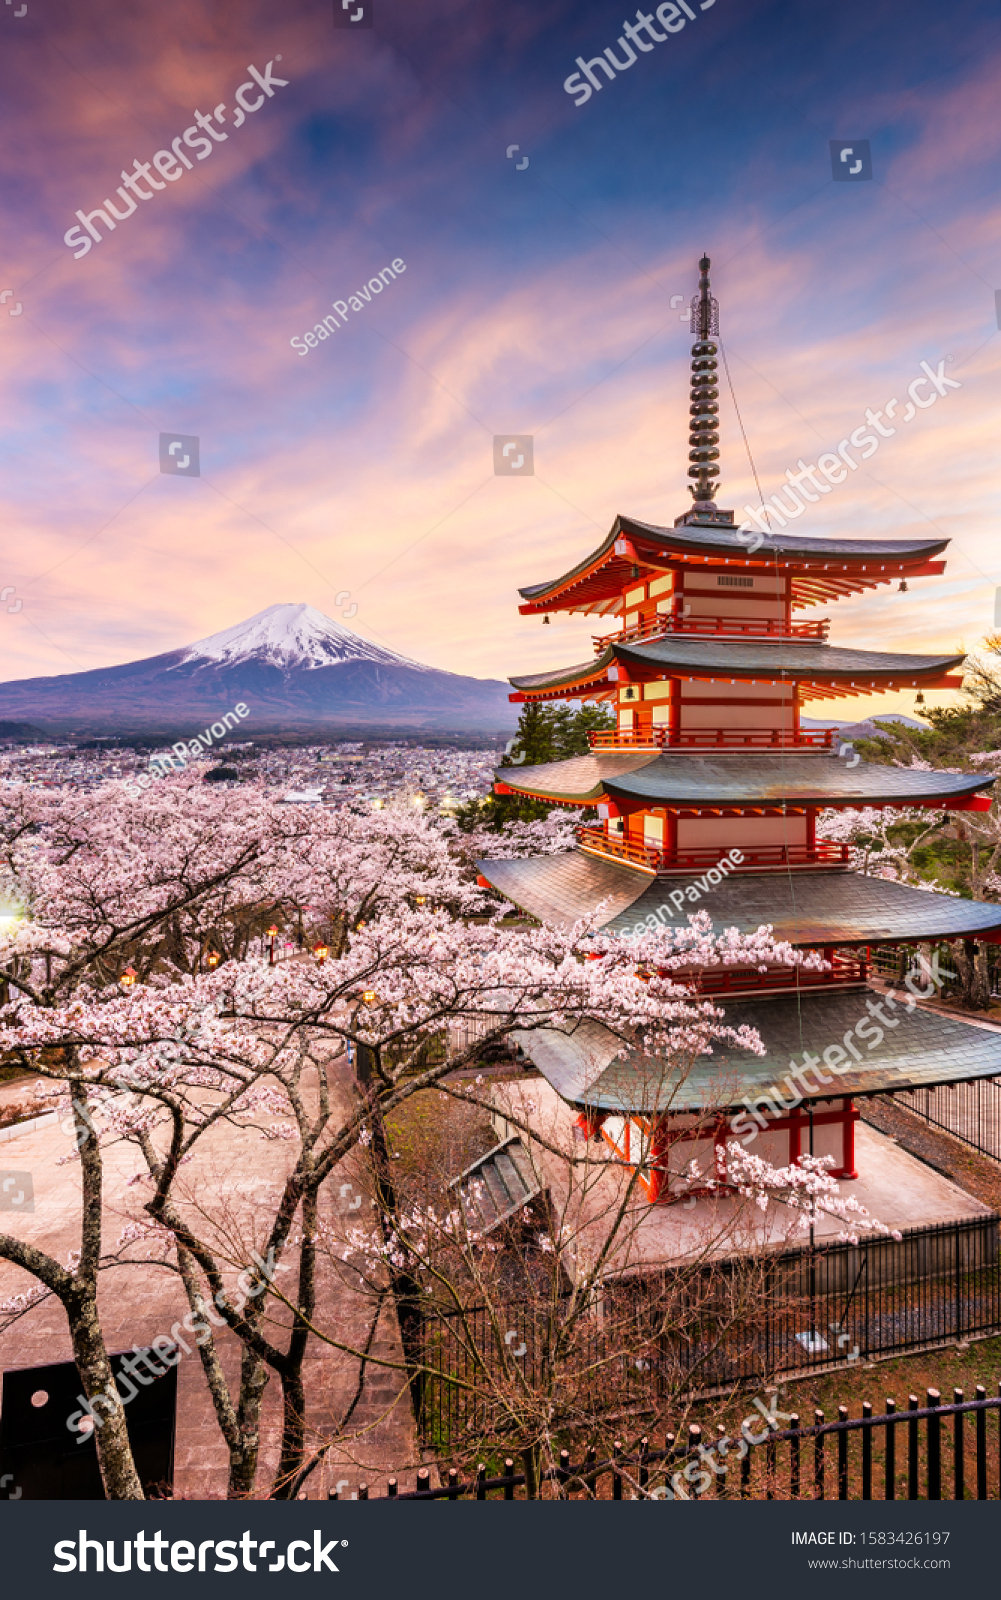 Fujiyoshida, Japan at Chureito Pagoda and Mt. Fuji in the spring with cherry blossoms. #1583426197